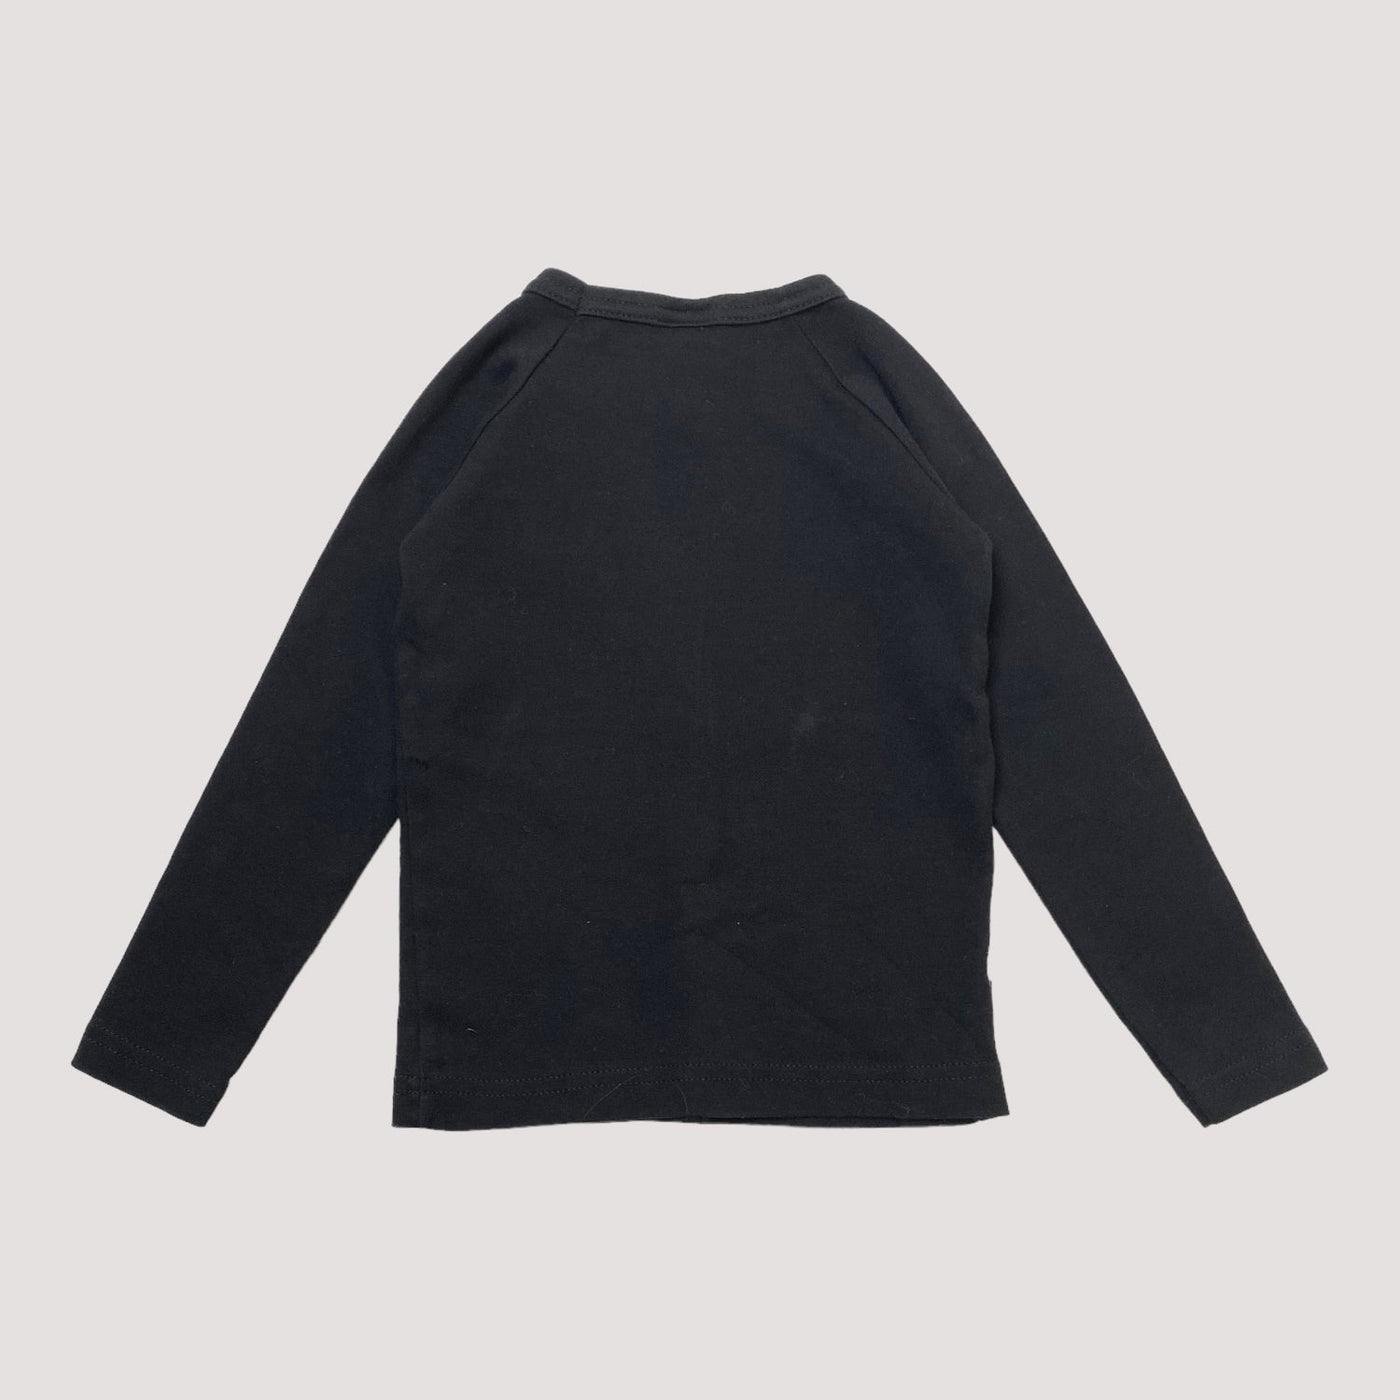 fringe shirt, black | 98cm